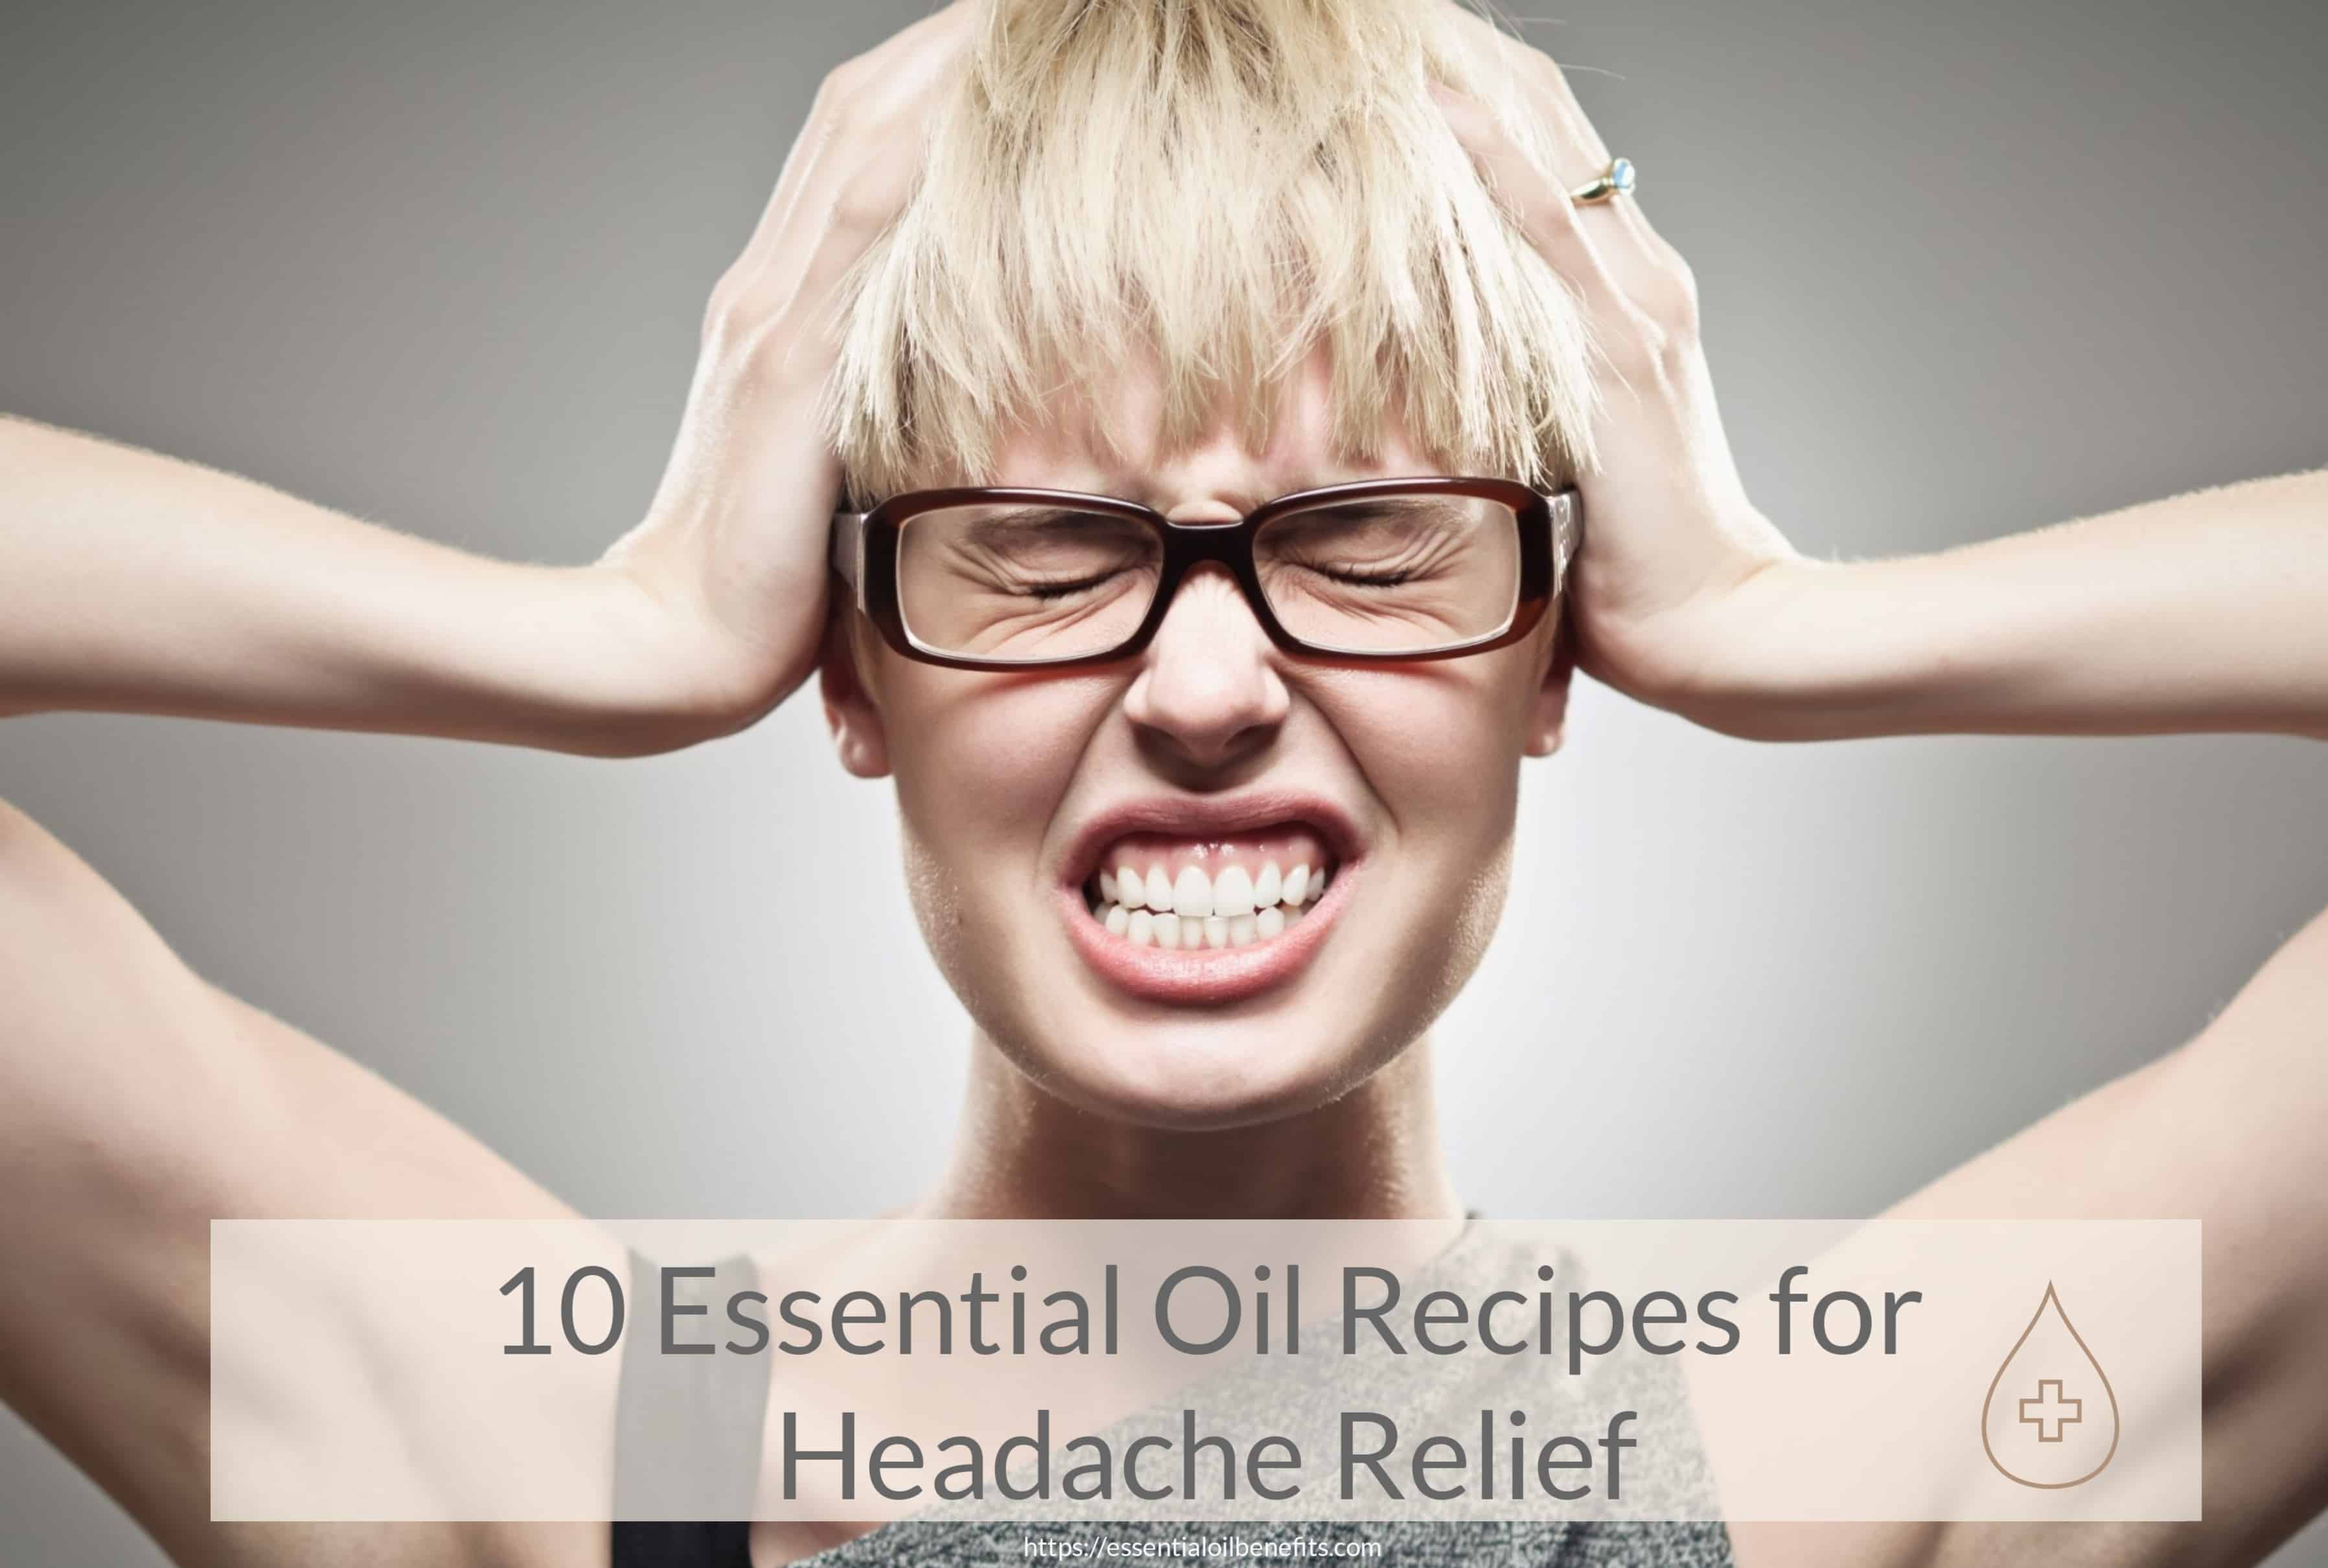 Best essential oi recipes for headaches